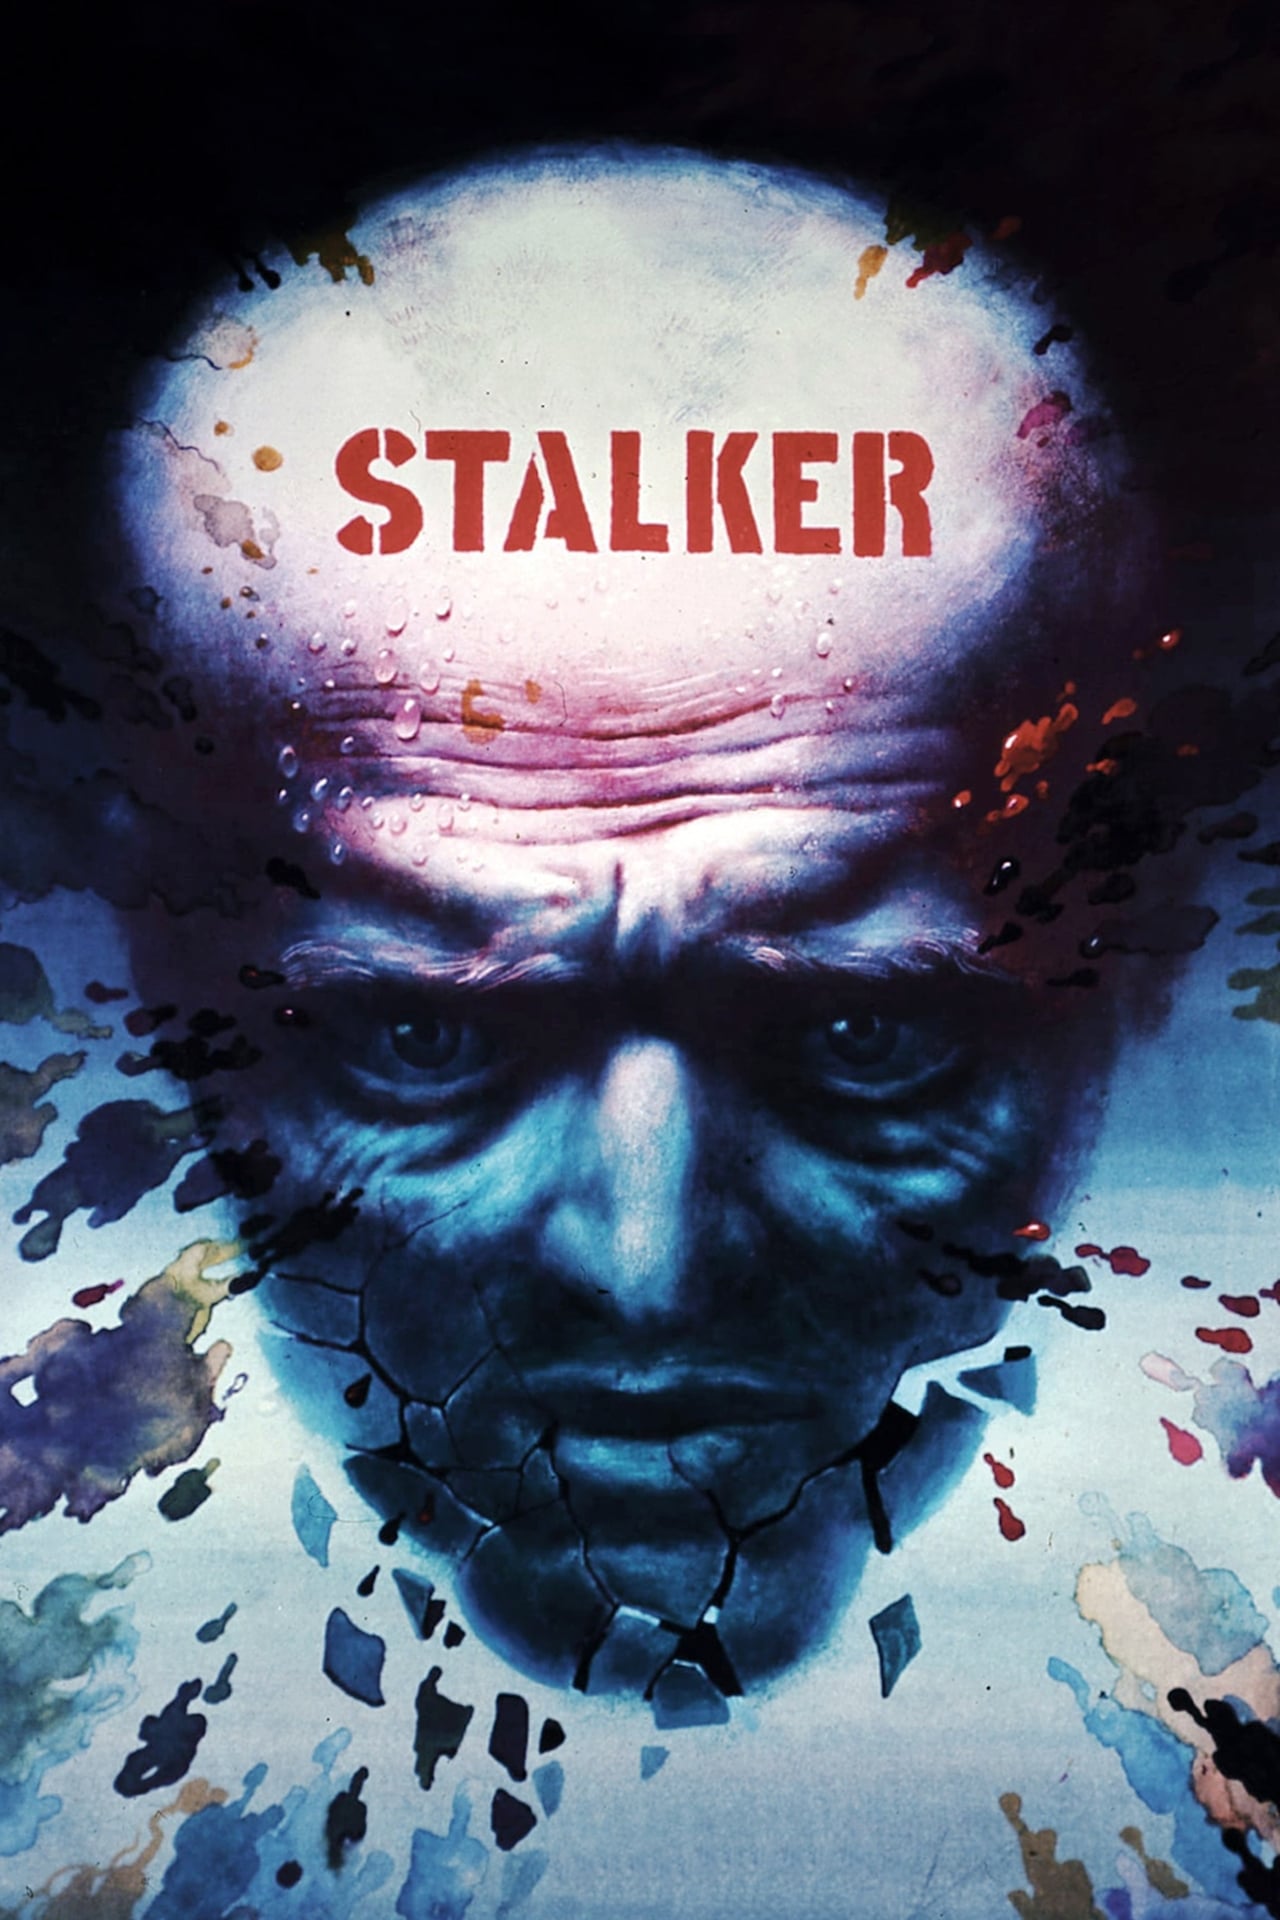 Plakát pro film “Stalker”